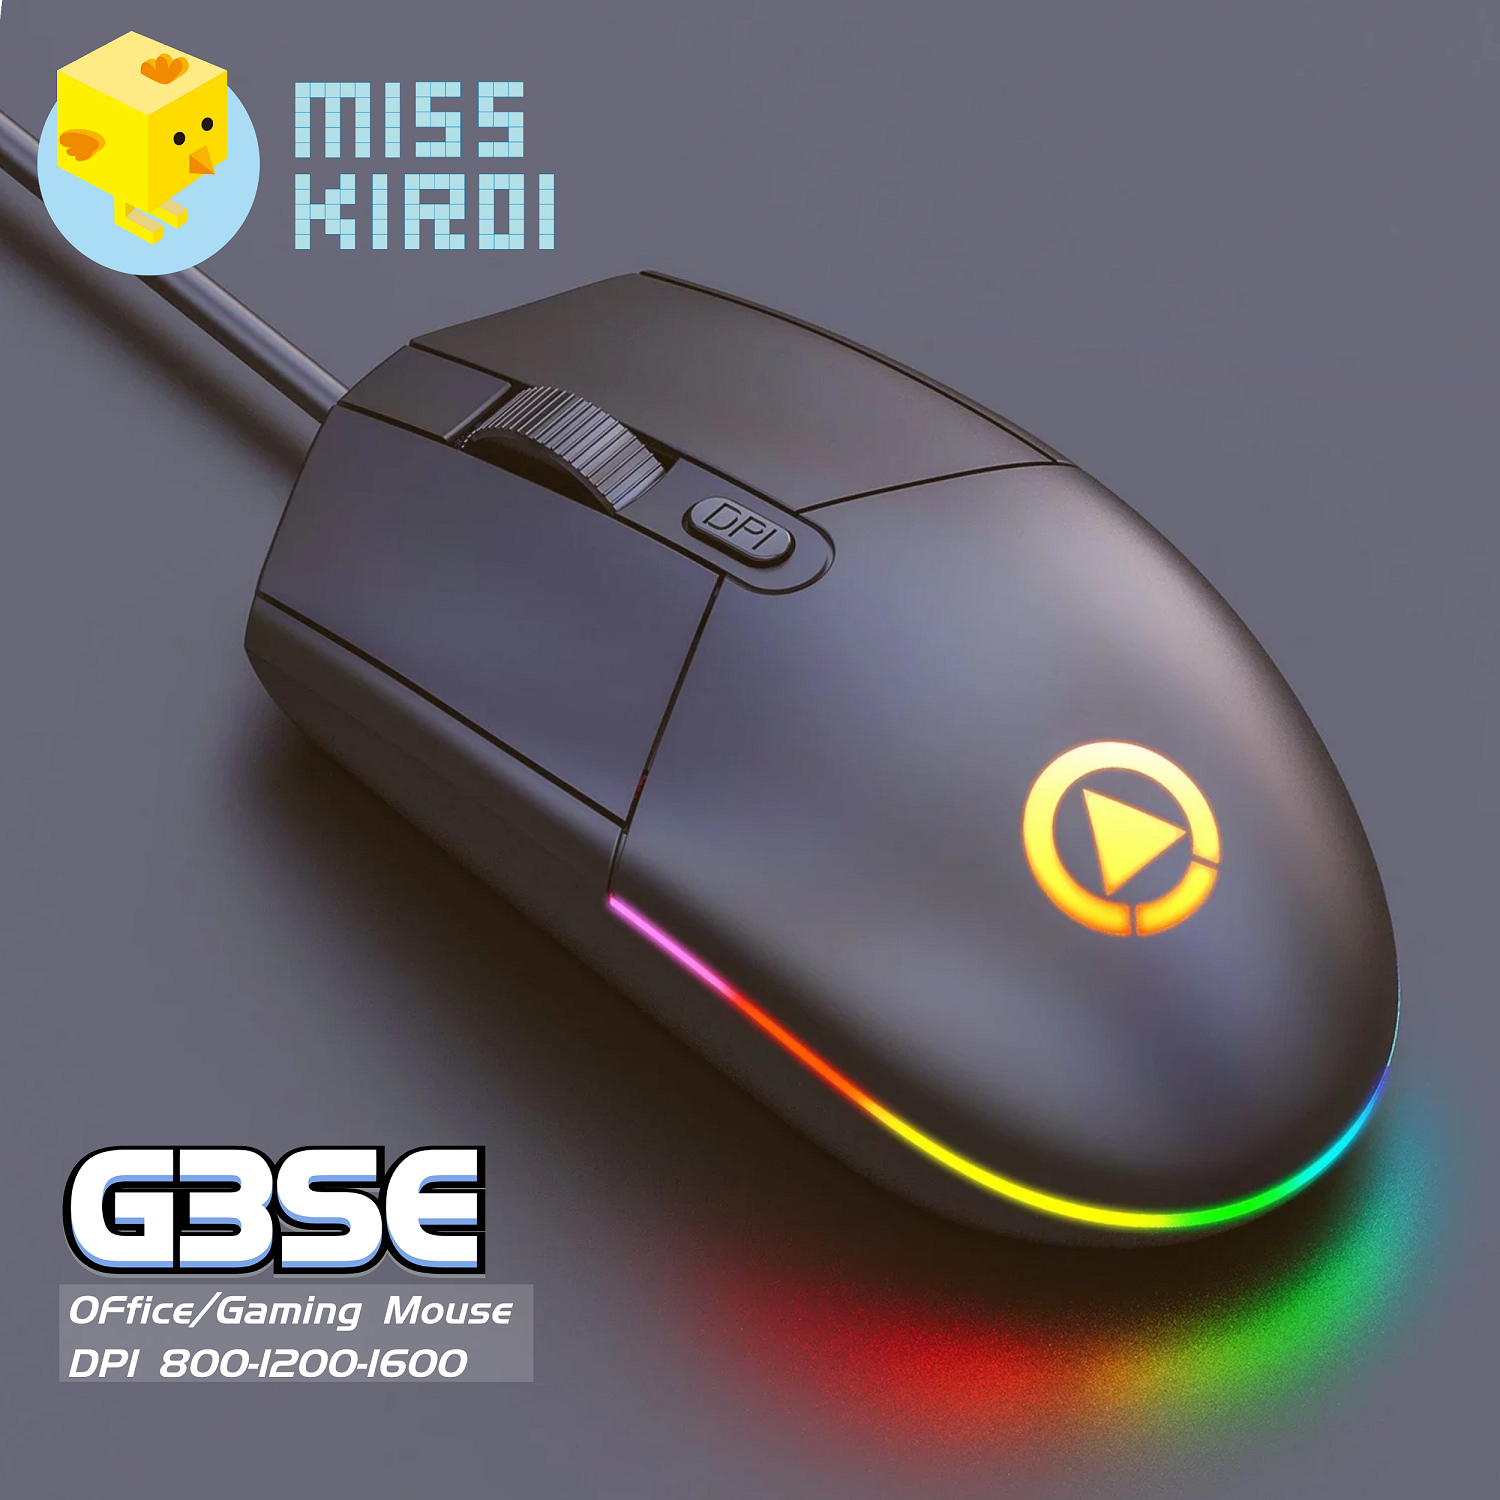 Miss Kiroi Model G3SE Optical LED RGB Office Gaming Mouse เมาส์เกมมิ่ง ออฟติคอล ตั้งมาโครคีย์ได้ ความแม่นยำสูงปรับ DPI 800- 1200-1600